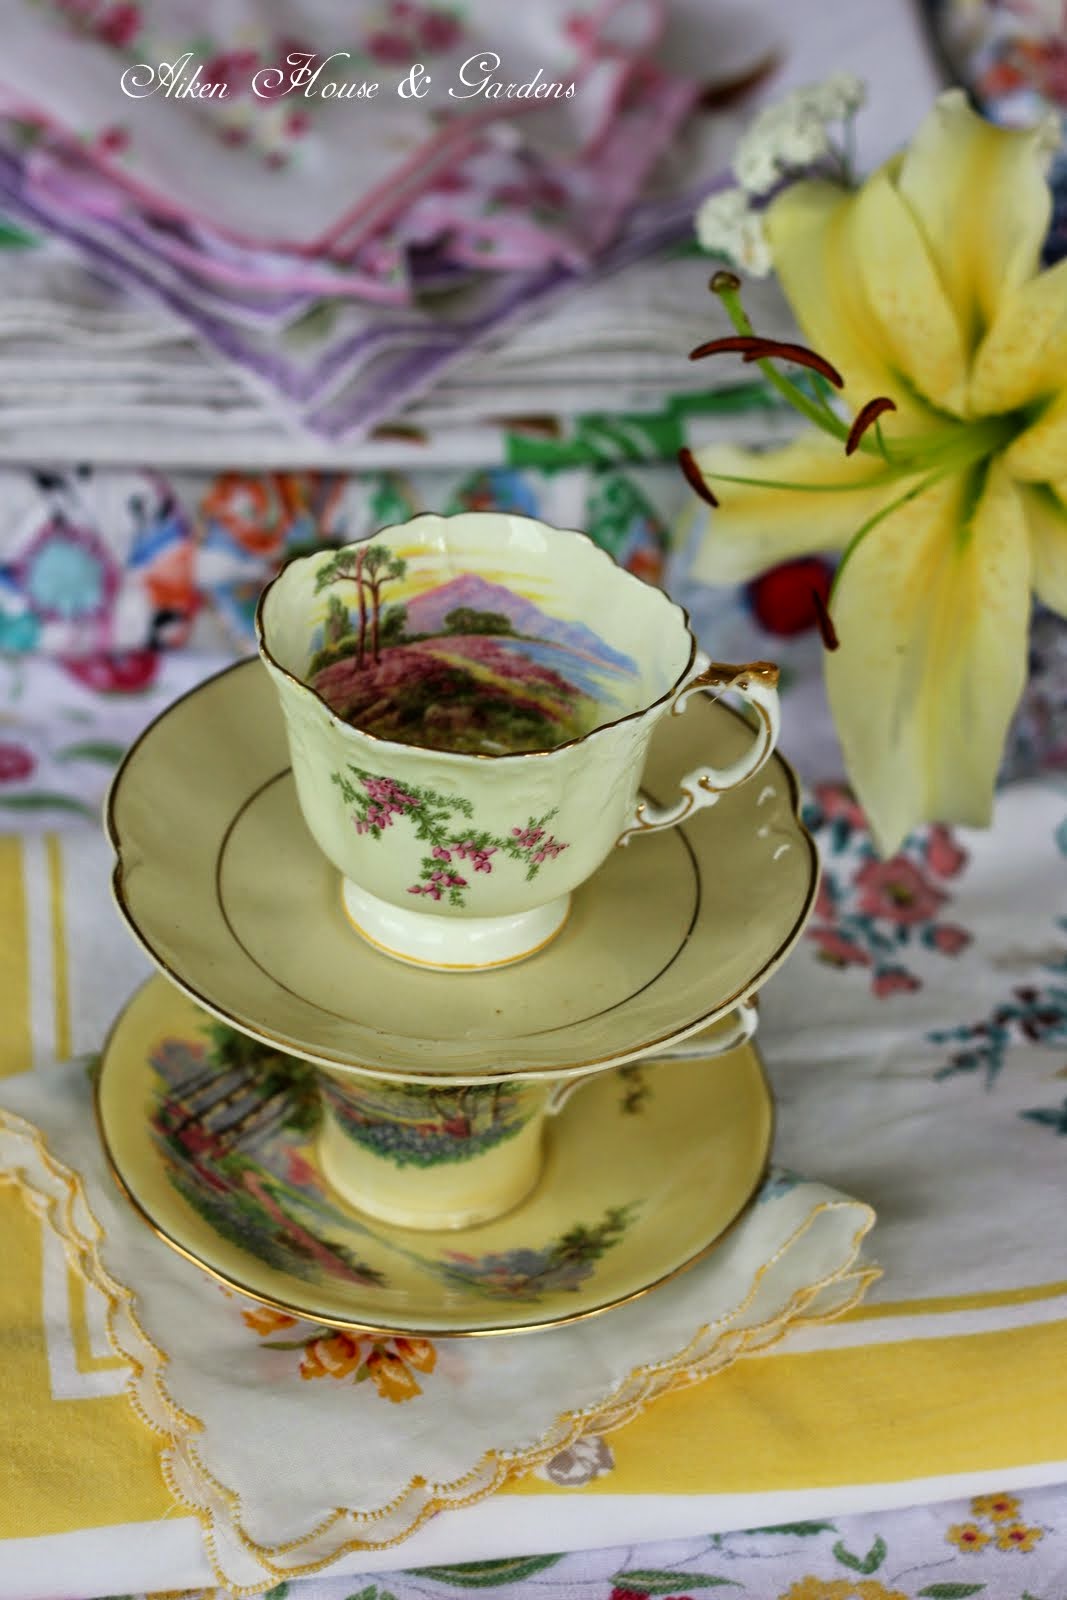 Aiken House & Gardens: Vintage Tea